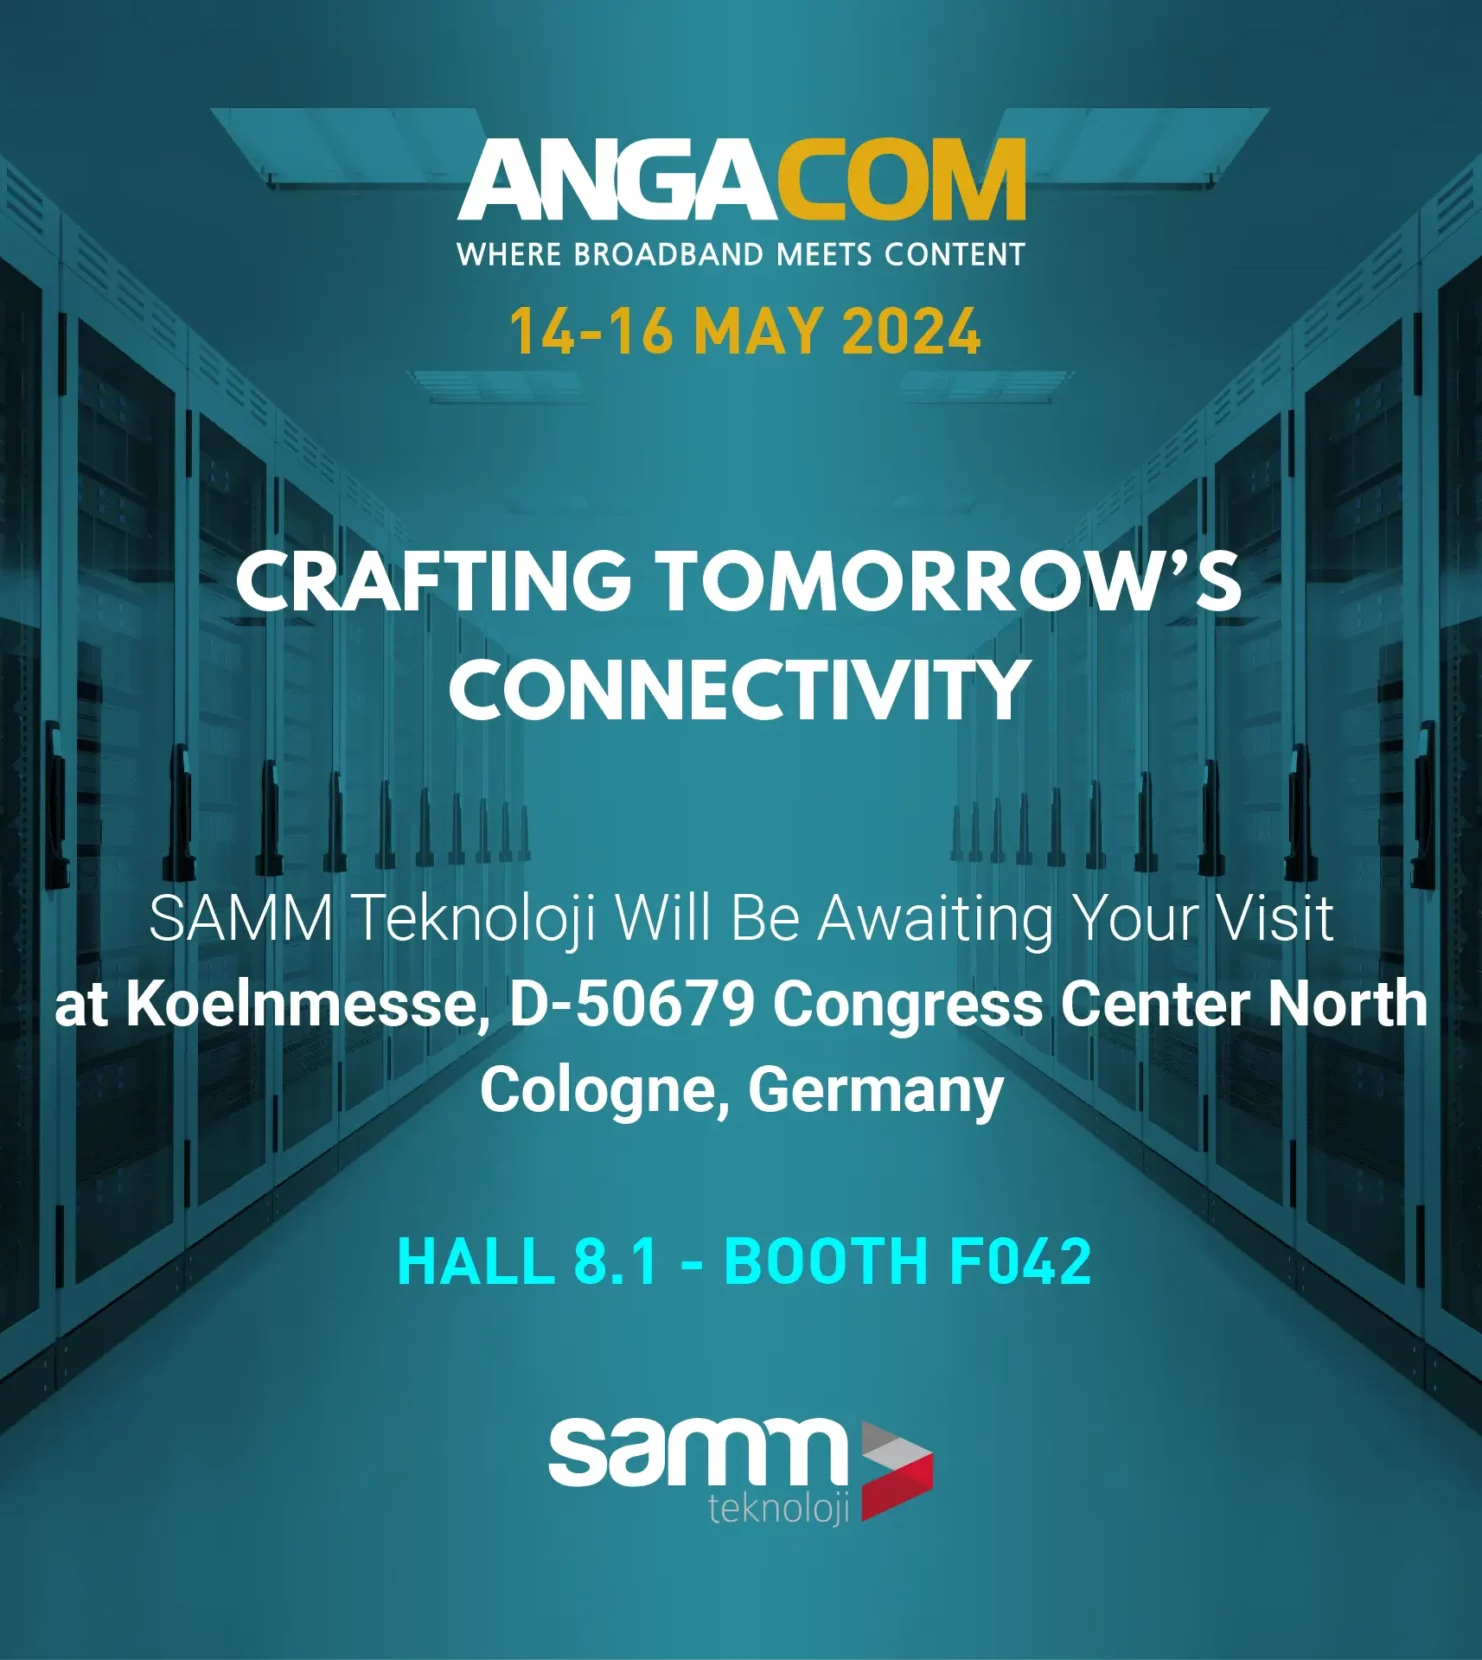 SAMM Teknoloji Will Be Awaiting Your Visit at AngaCom 2024. Koelnmesse, D-50679 Congress Center North Cologne, Germany